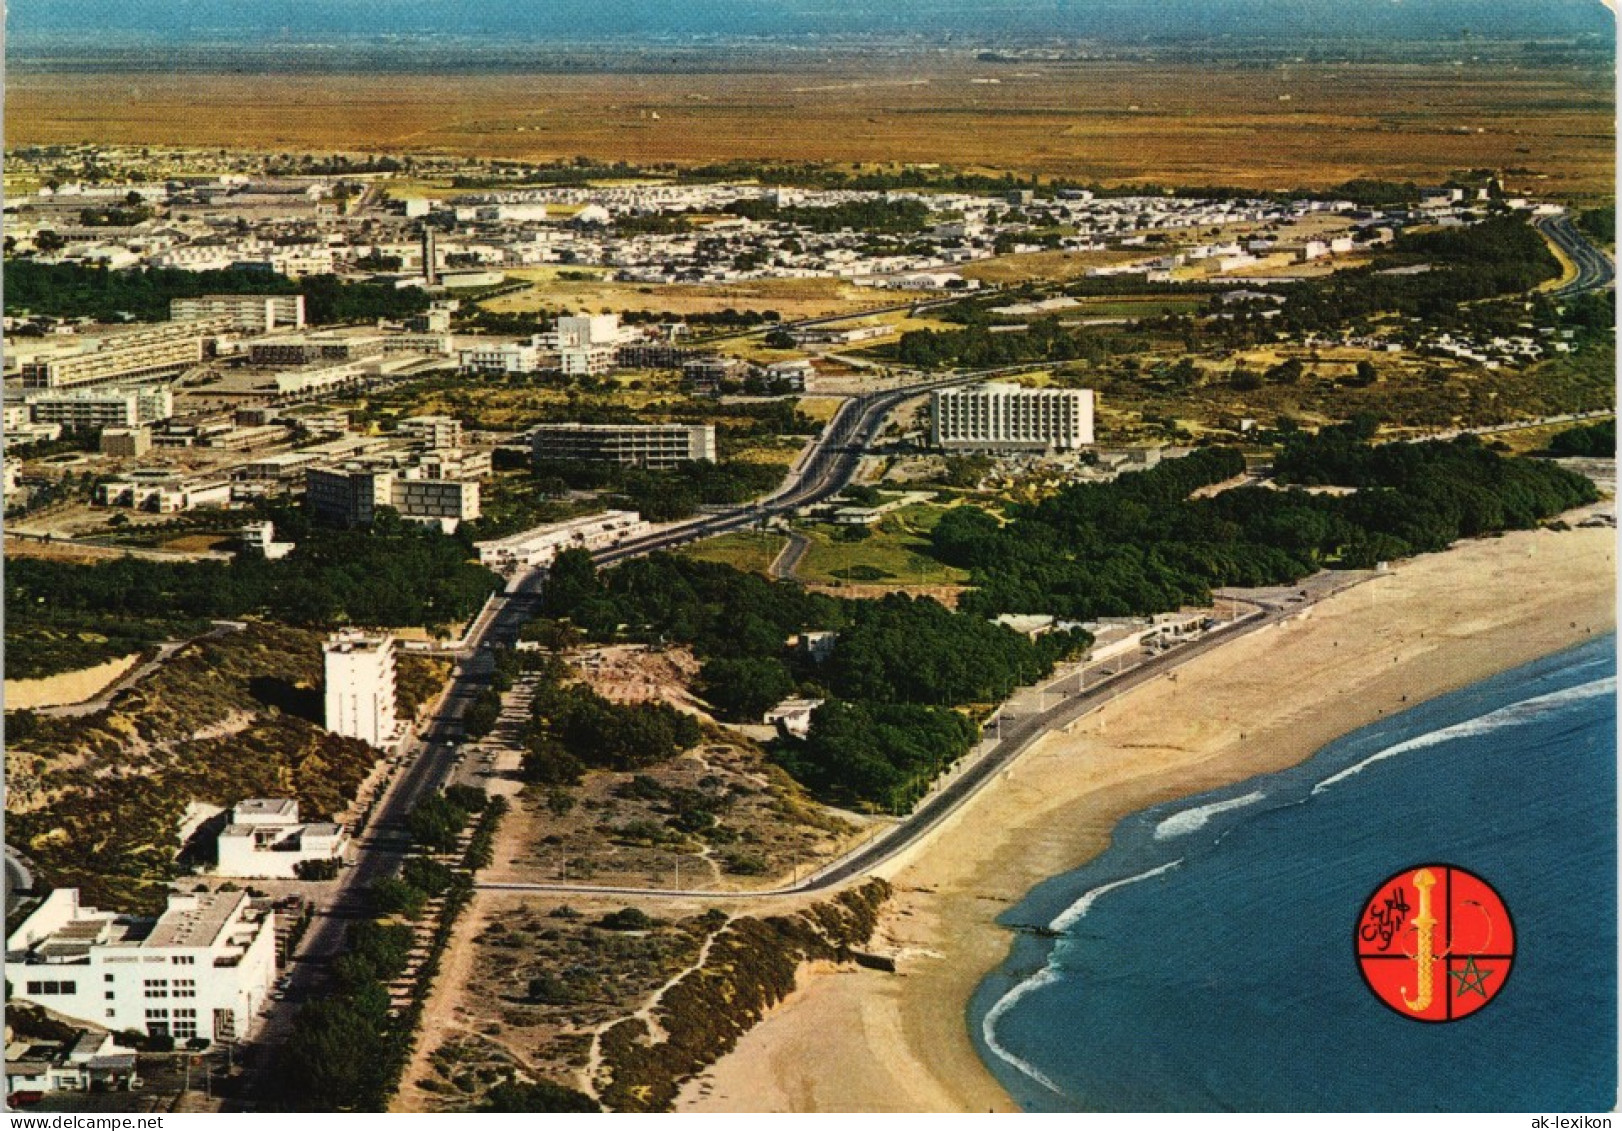 Postcard Agadir Vue Aérienne Panorama Aus Dem Flugzeug 1975 - Agadir